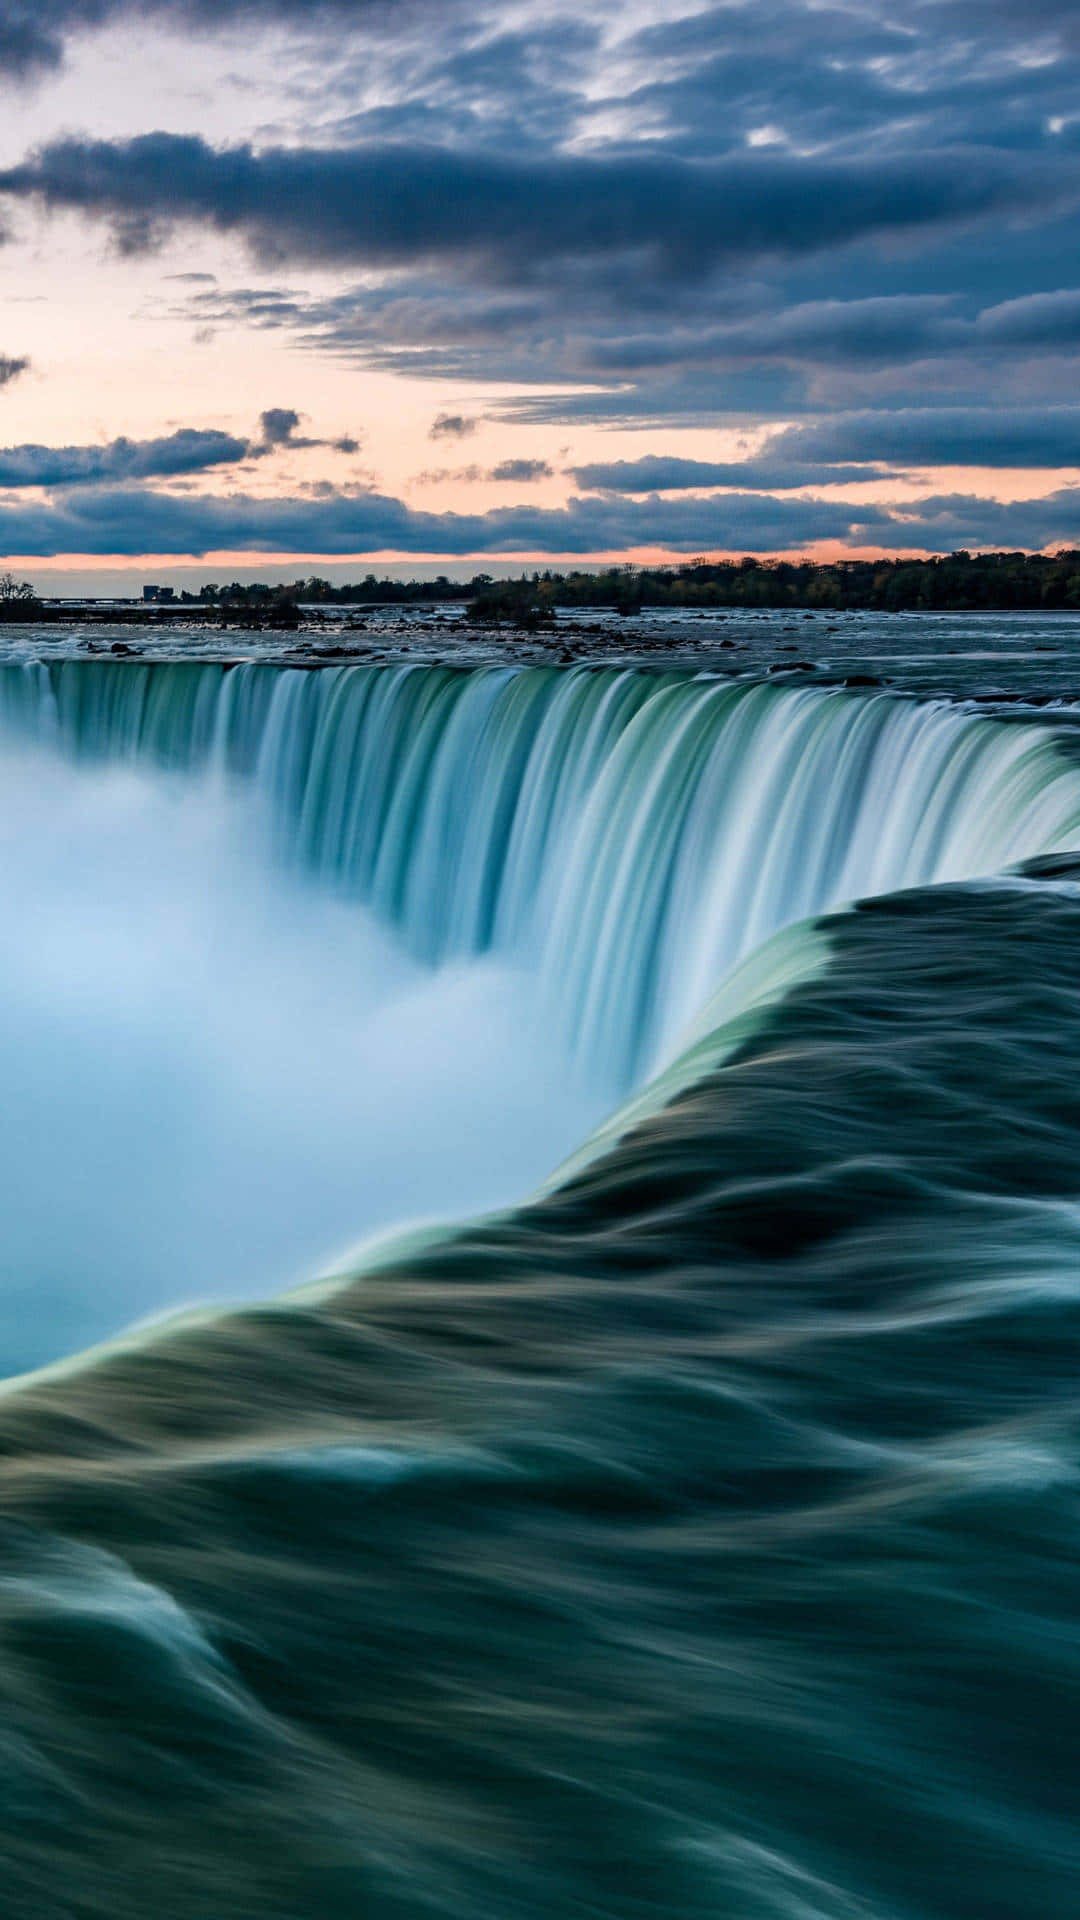 The Majestic Beauty of Niagara Falls